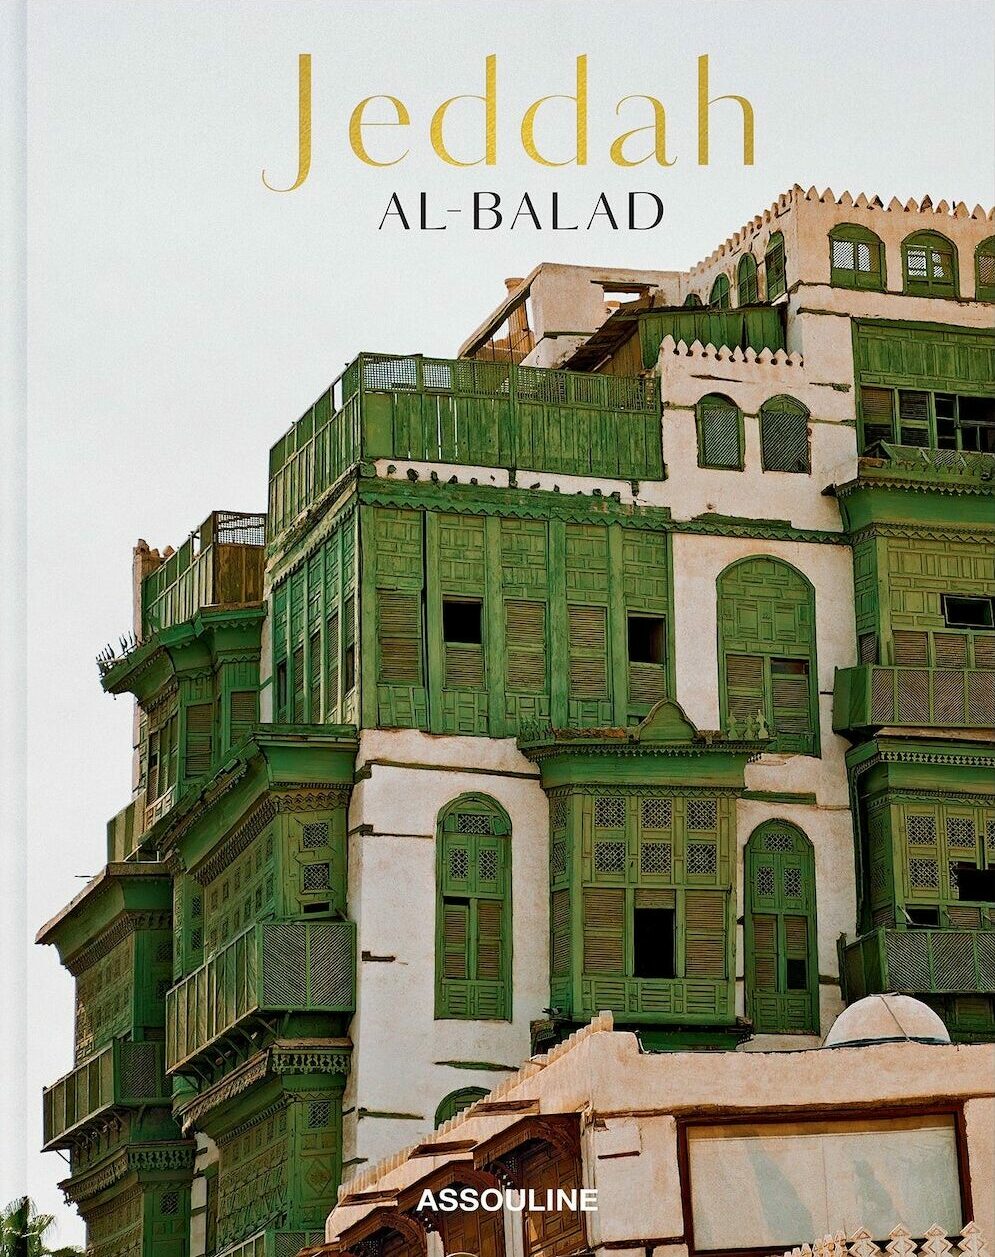 Jeddah Al-Balad